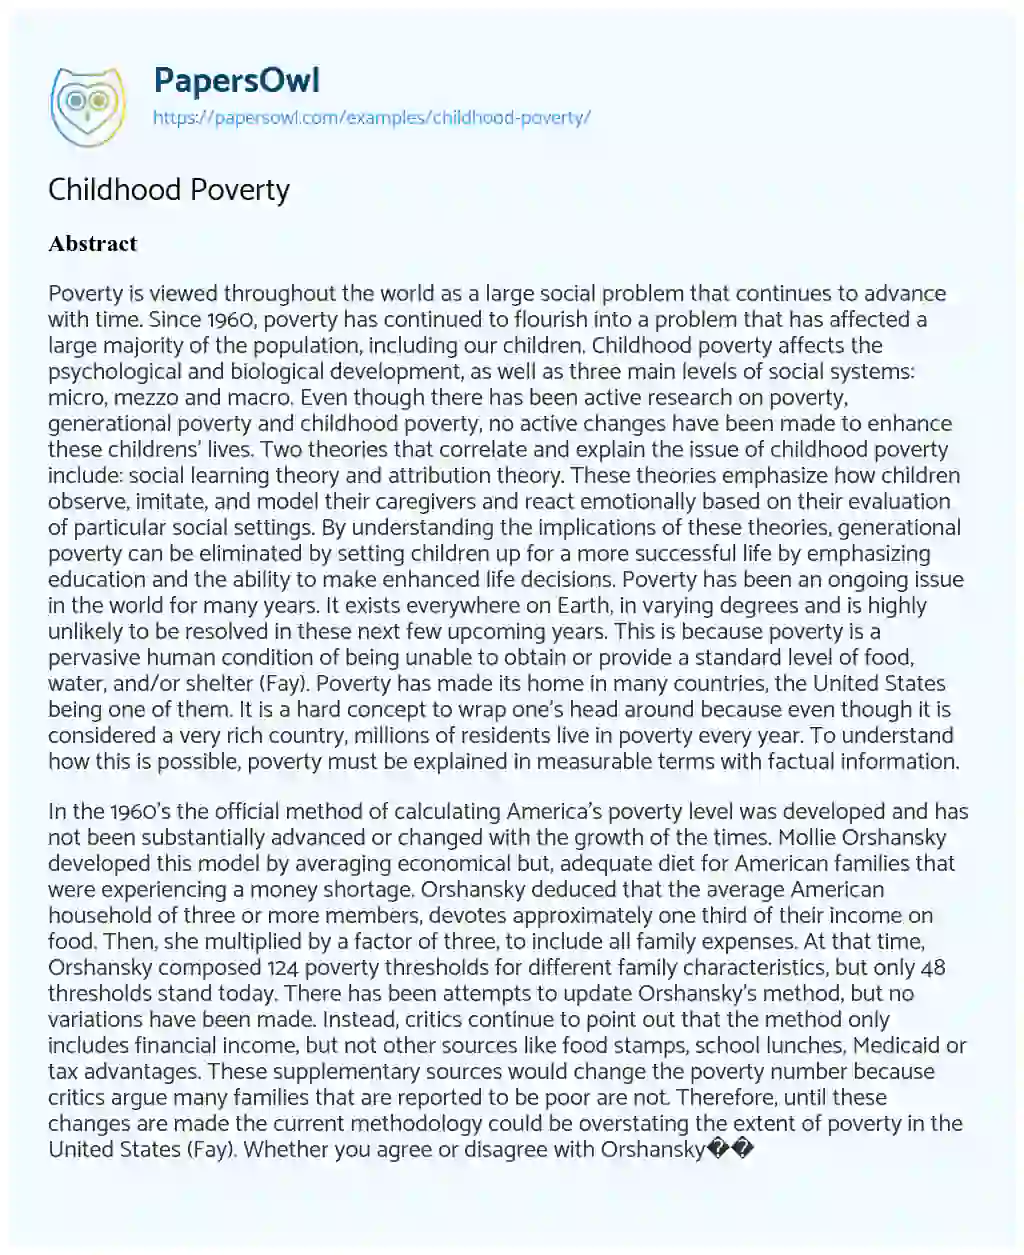 Essay on Childhood Poverty